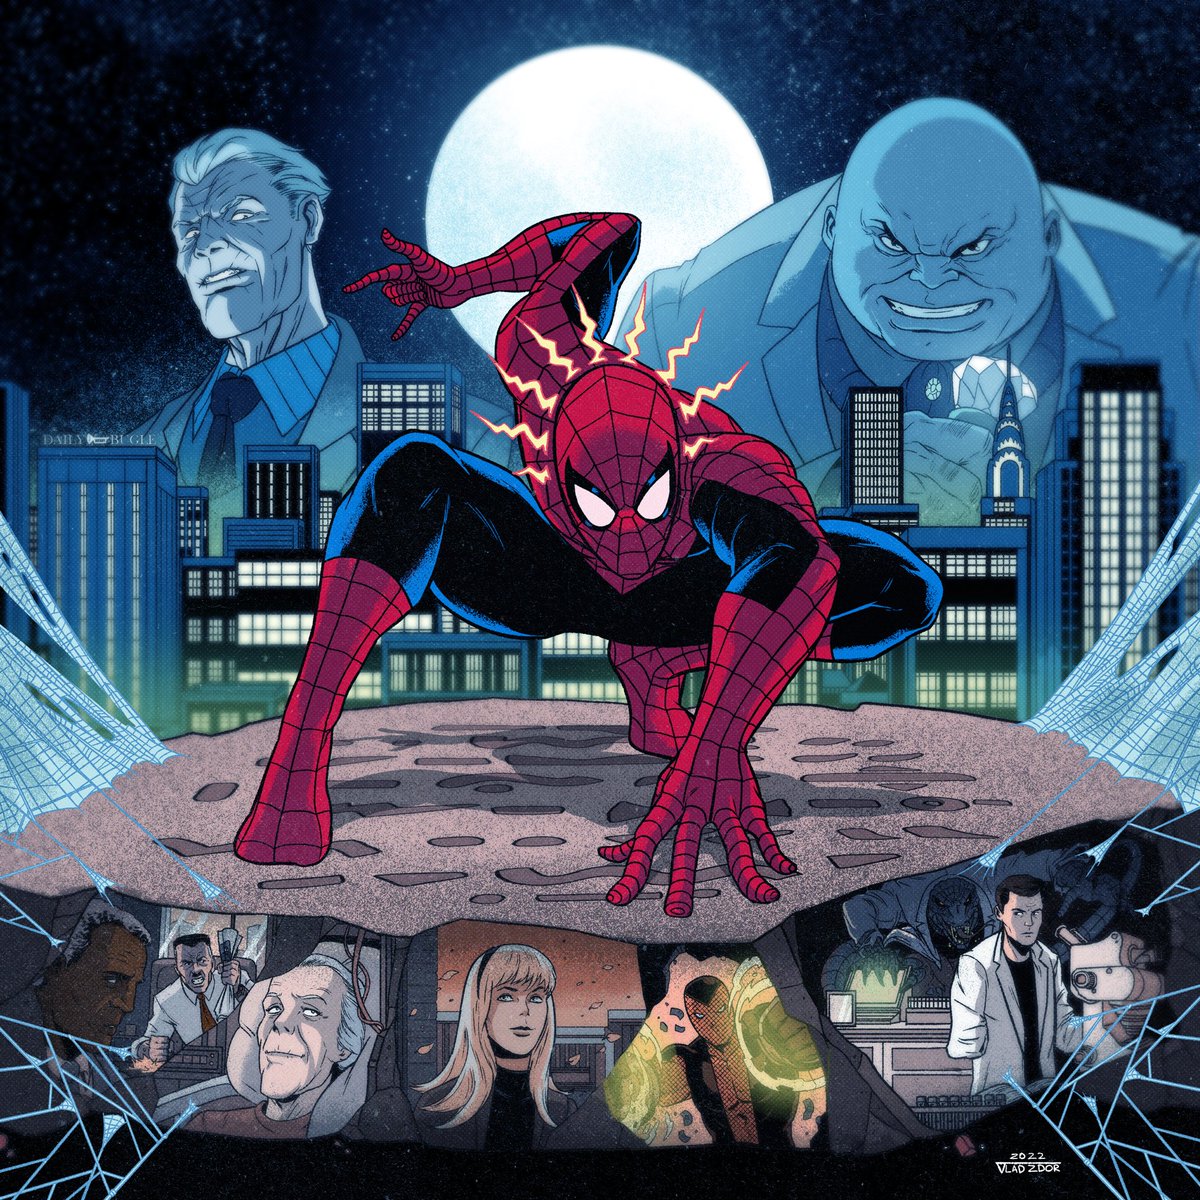 RT @VladZdor: Spider-Man. Forever Young 
#SpiderMan #comics #art https://t.co/cnitdKwVKs